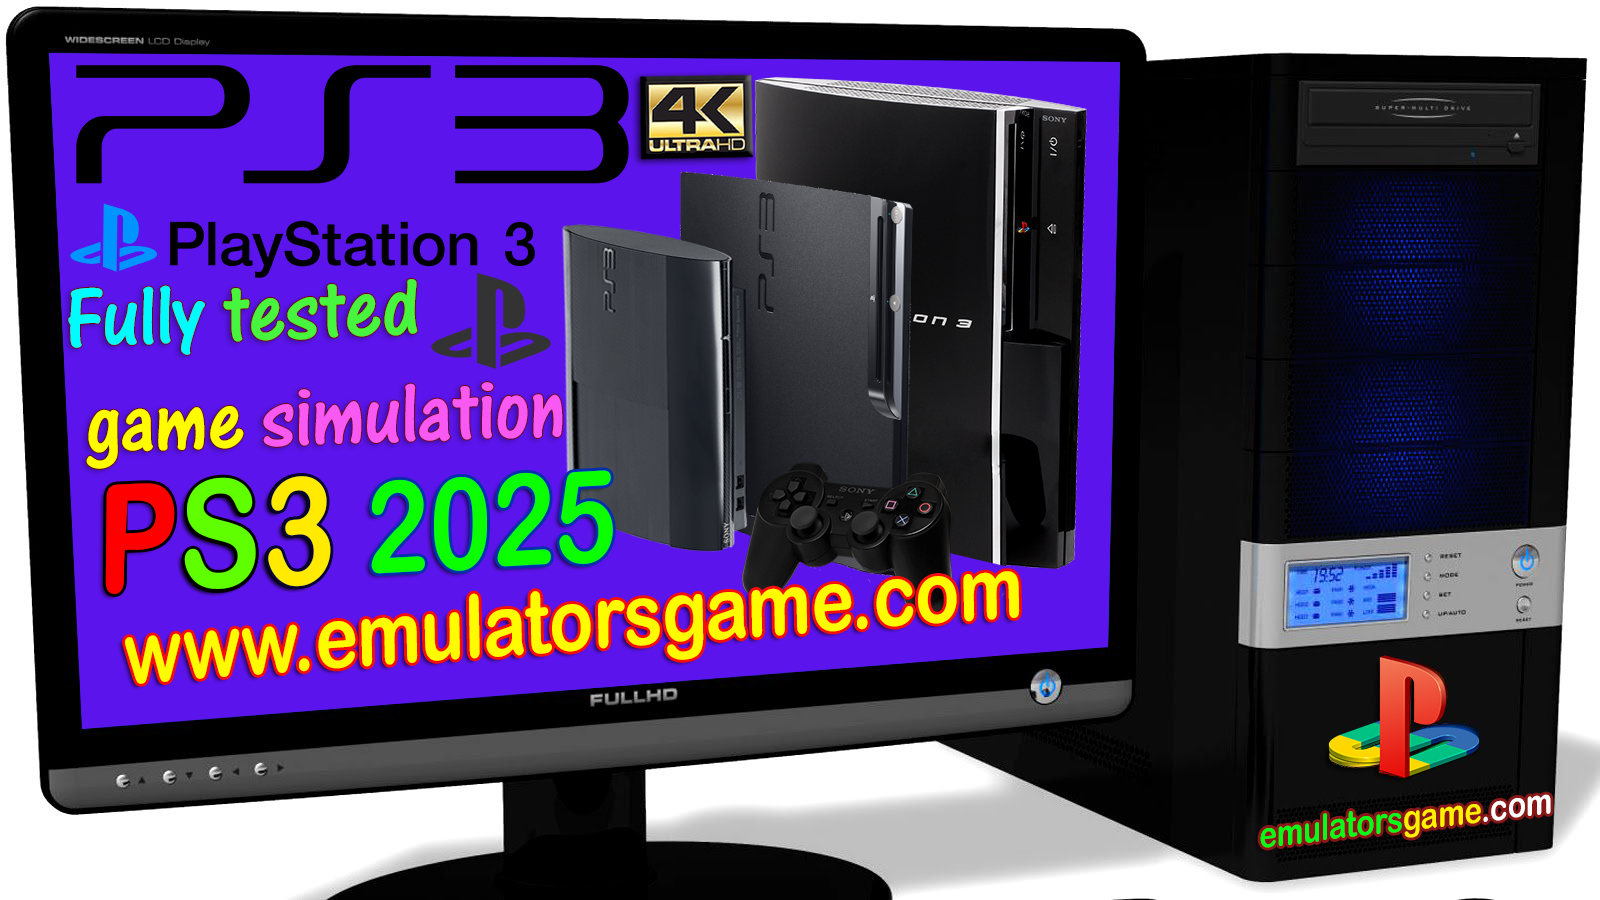 playstation emulator games download sites for pc free